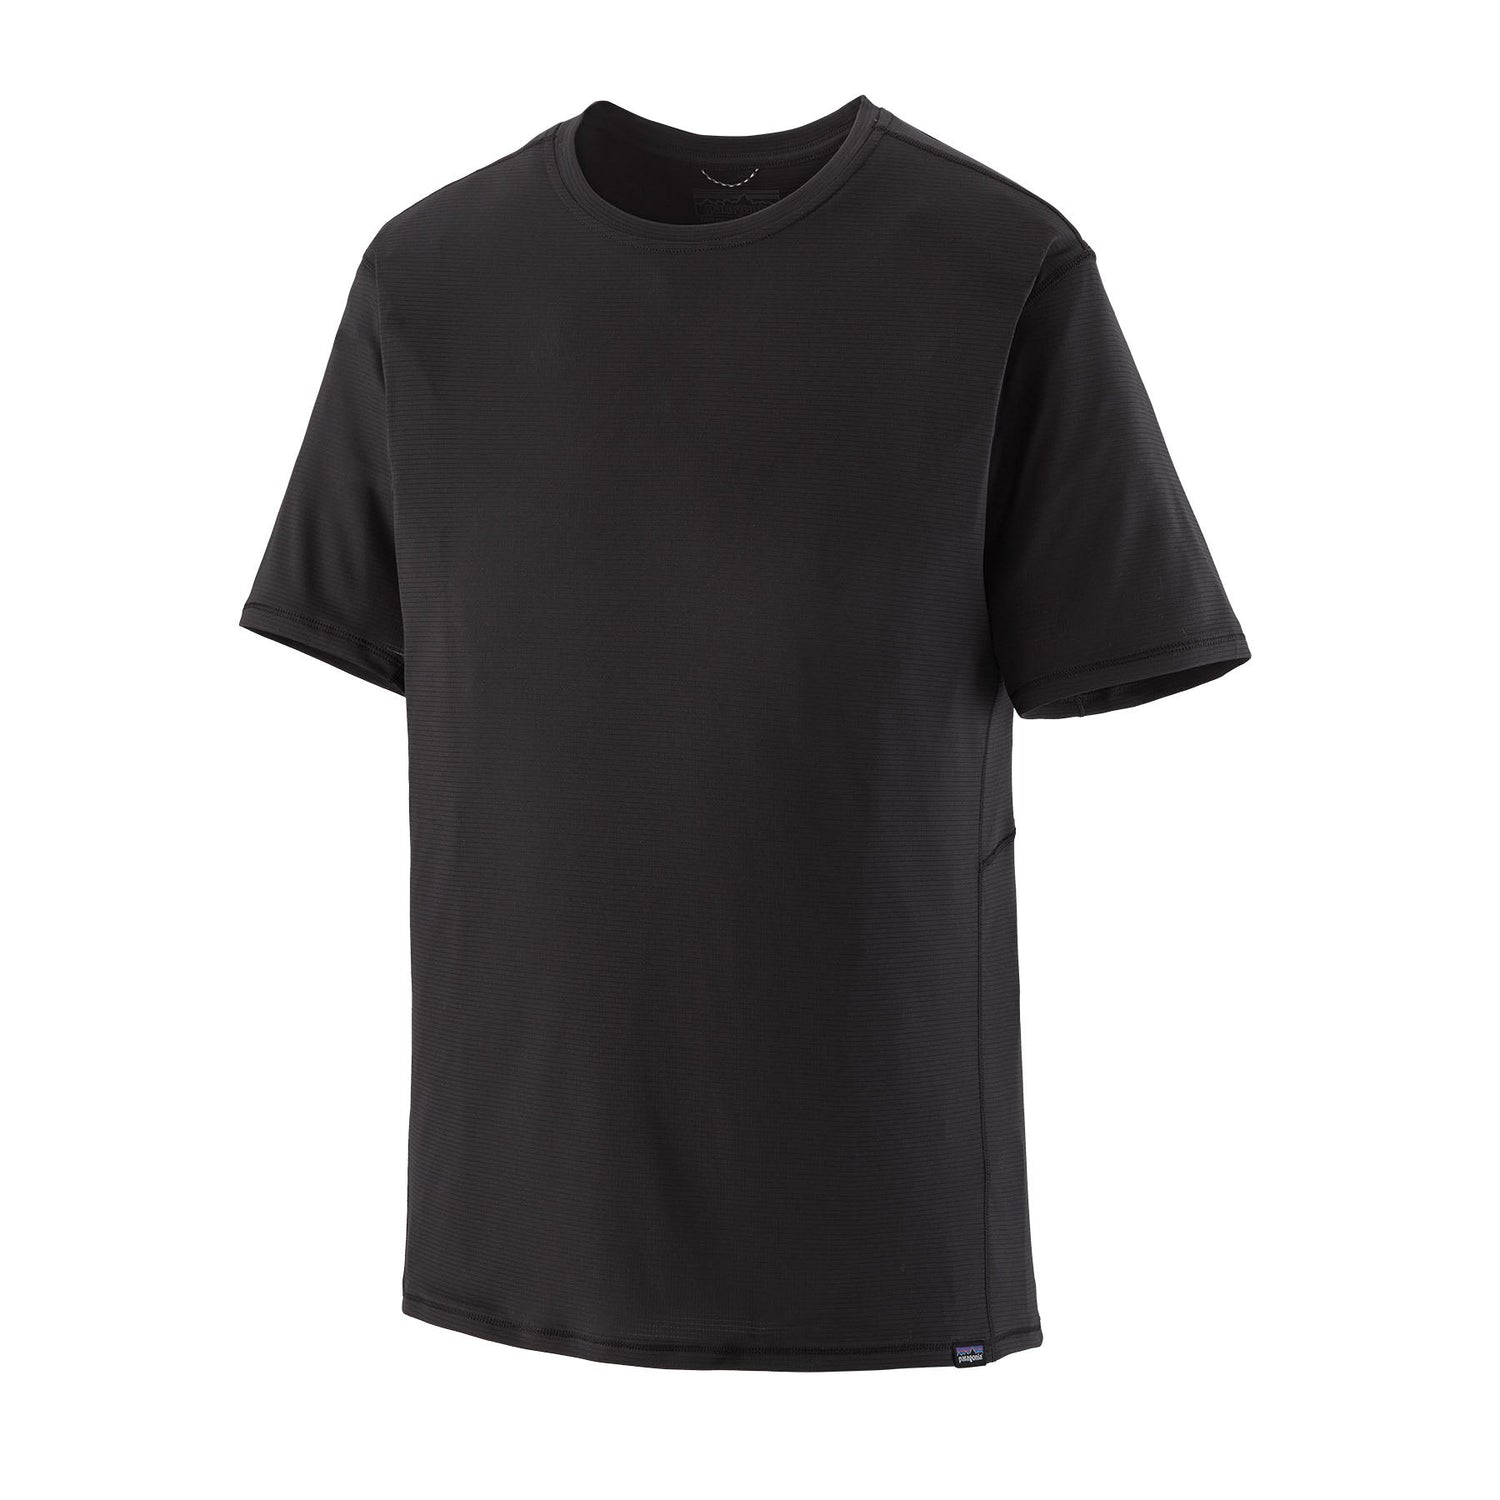 Patagonia M's Cap Cool Lightweight Shirt - Recycled Polyester Black Shirt